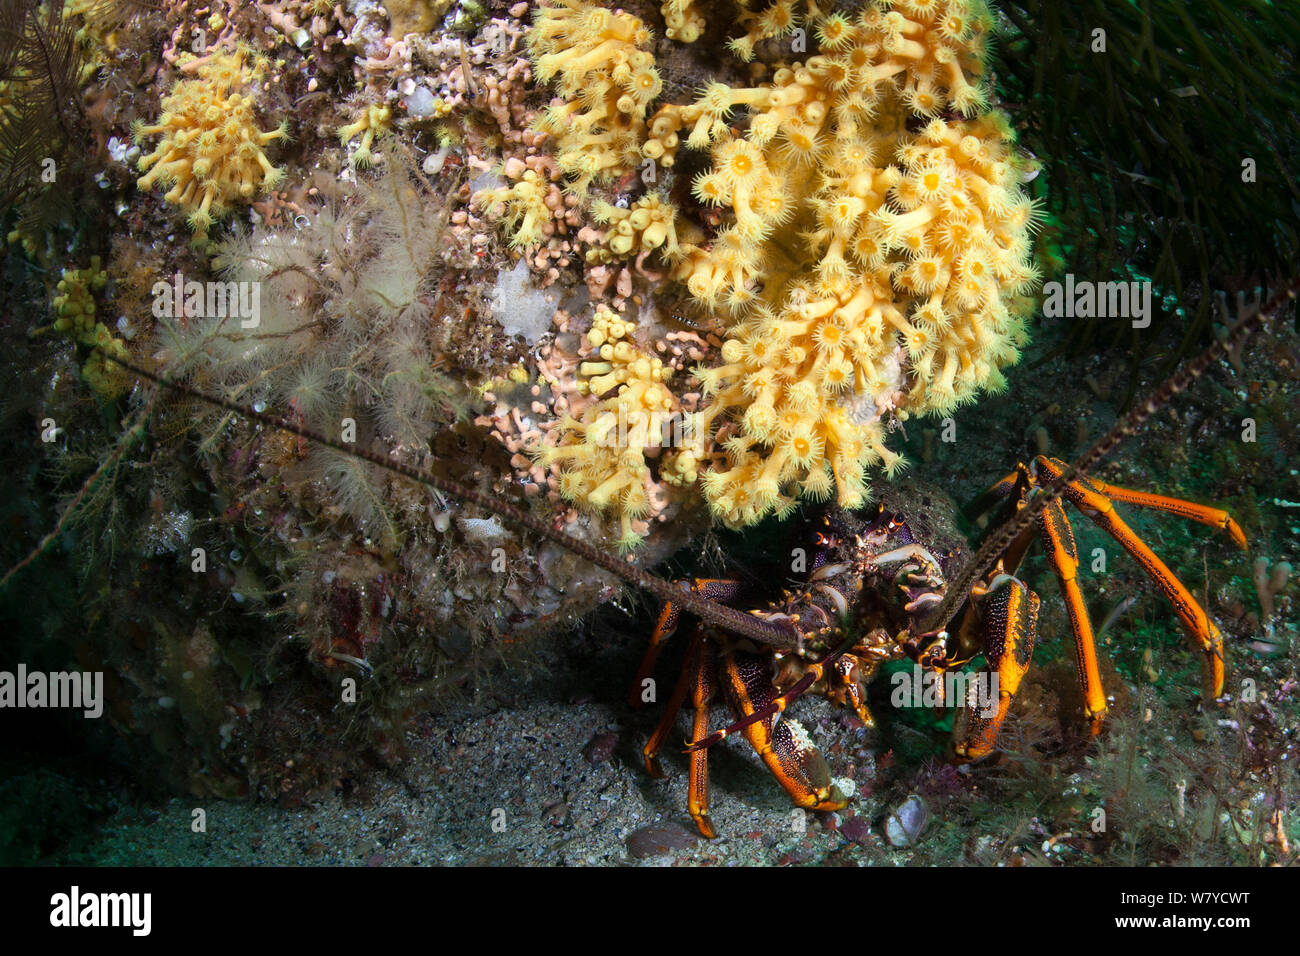 New Zealand crayfish or southern rock lobster (Jasus edwardsii) hides under the yellow zoathhid anemone (Parazoanthus elongates) in Doubtful Sound, Fiordland National Park, New Zealand. Stock Photo